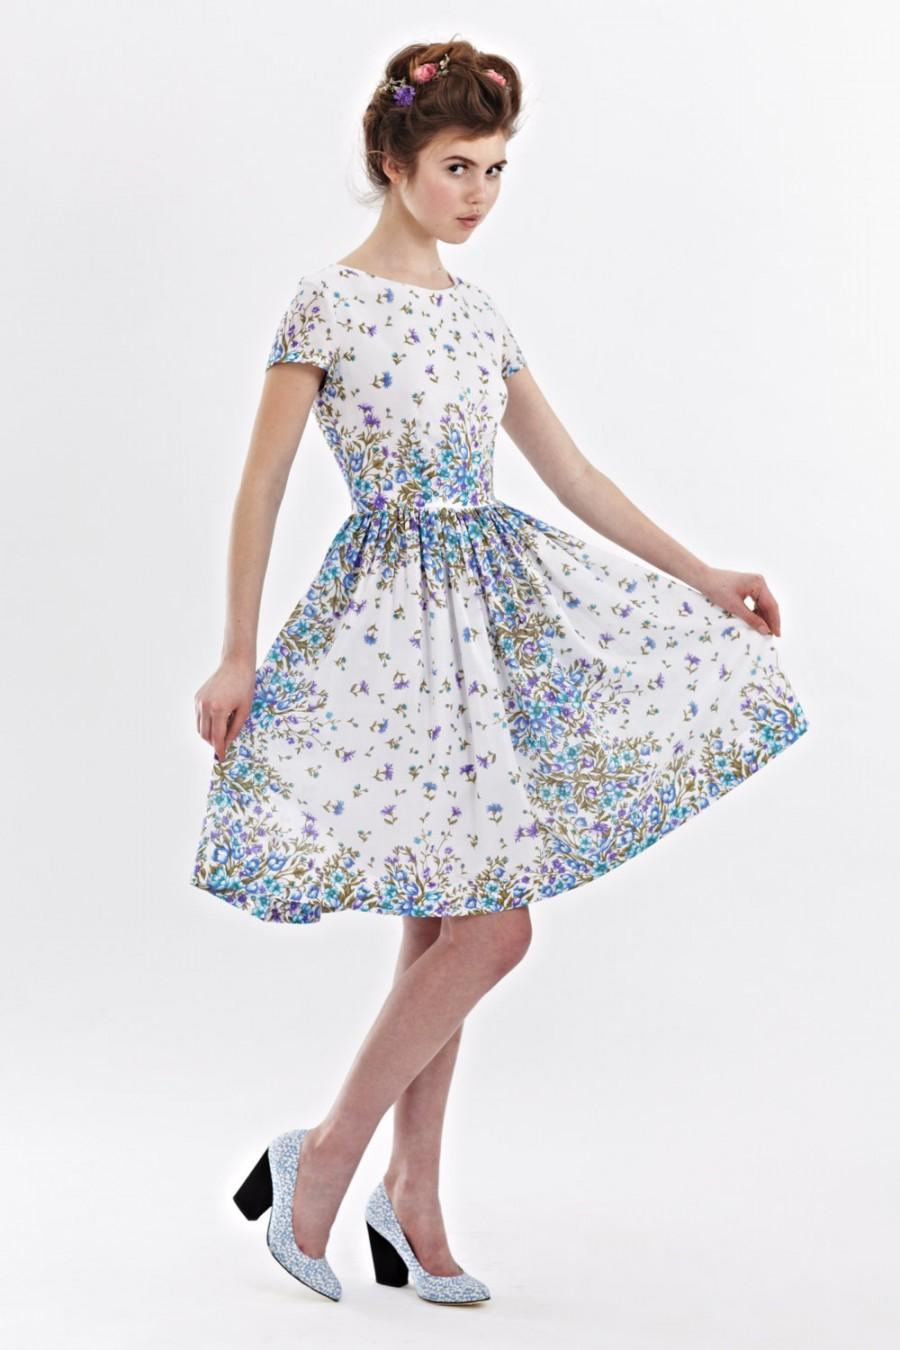 1950s Floral Dress Tea Party Dress Women 50s Retro Dress Prom Dress 50s Vintage Inspired Dress